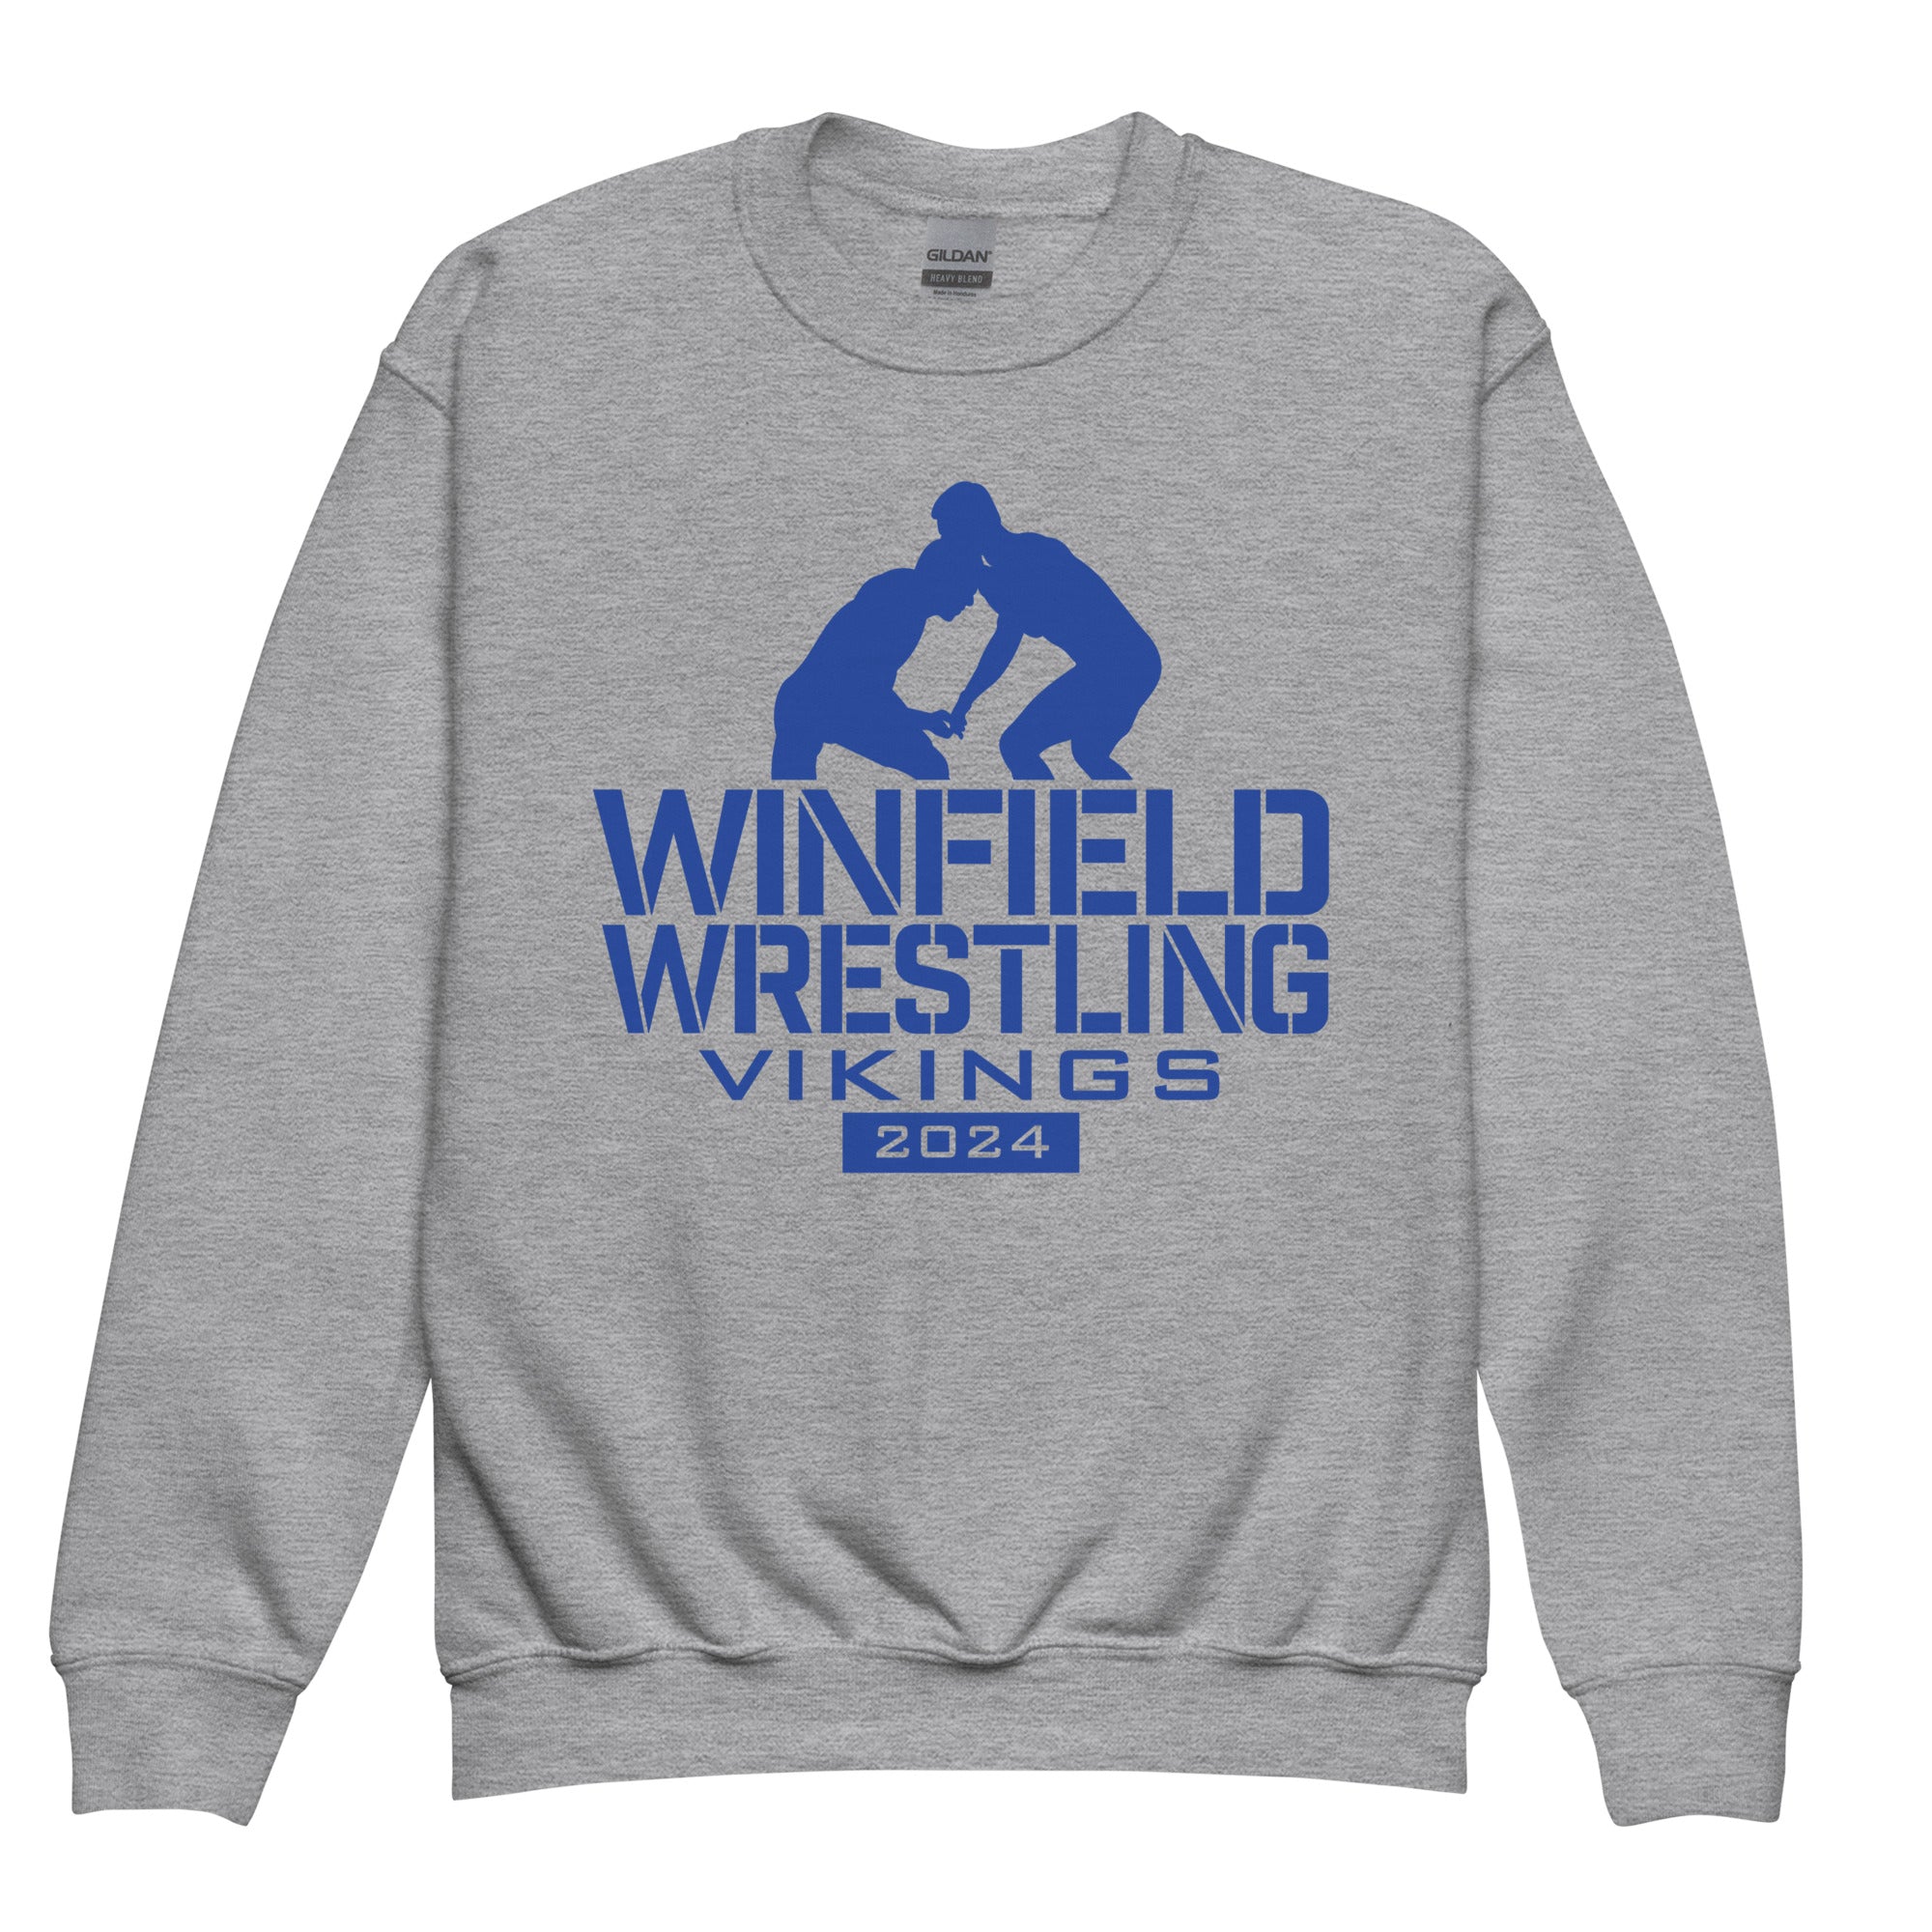 Winfield Wrestling Vikings 2024 Youth crewneck sweatshirt